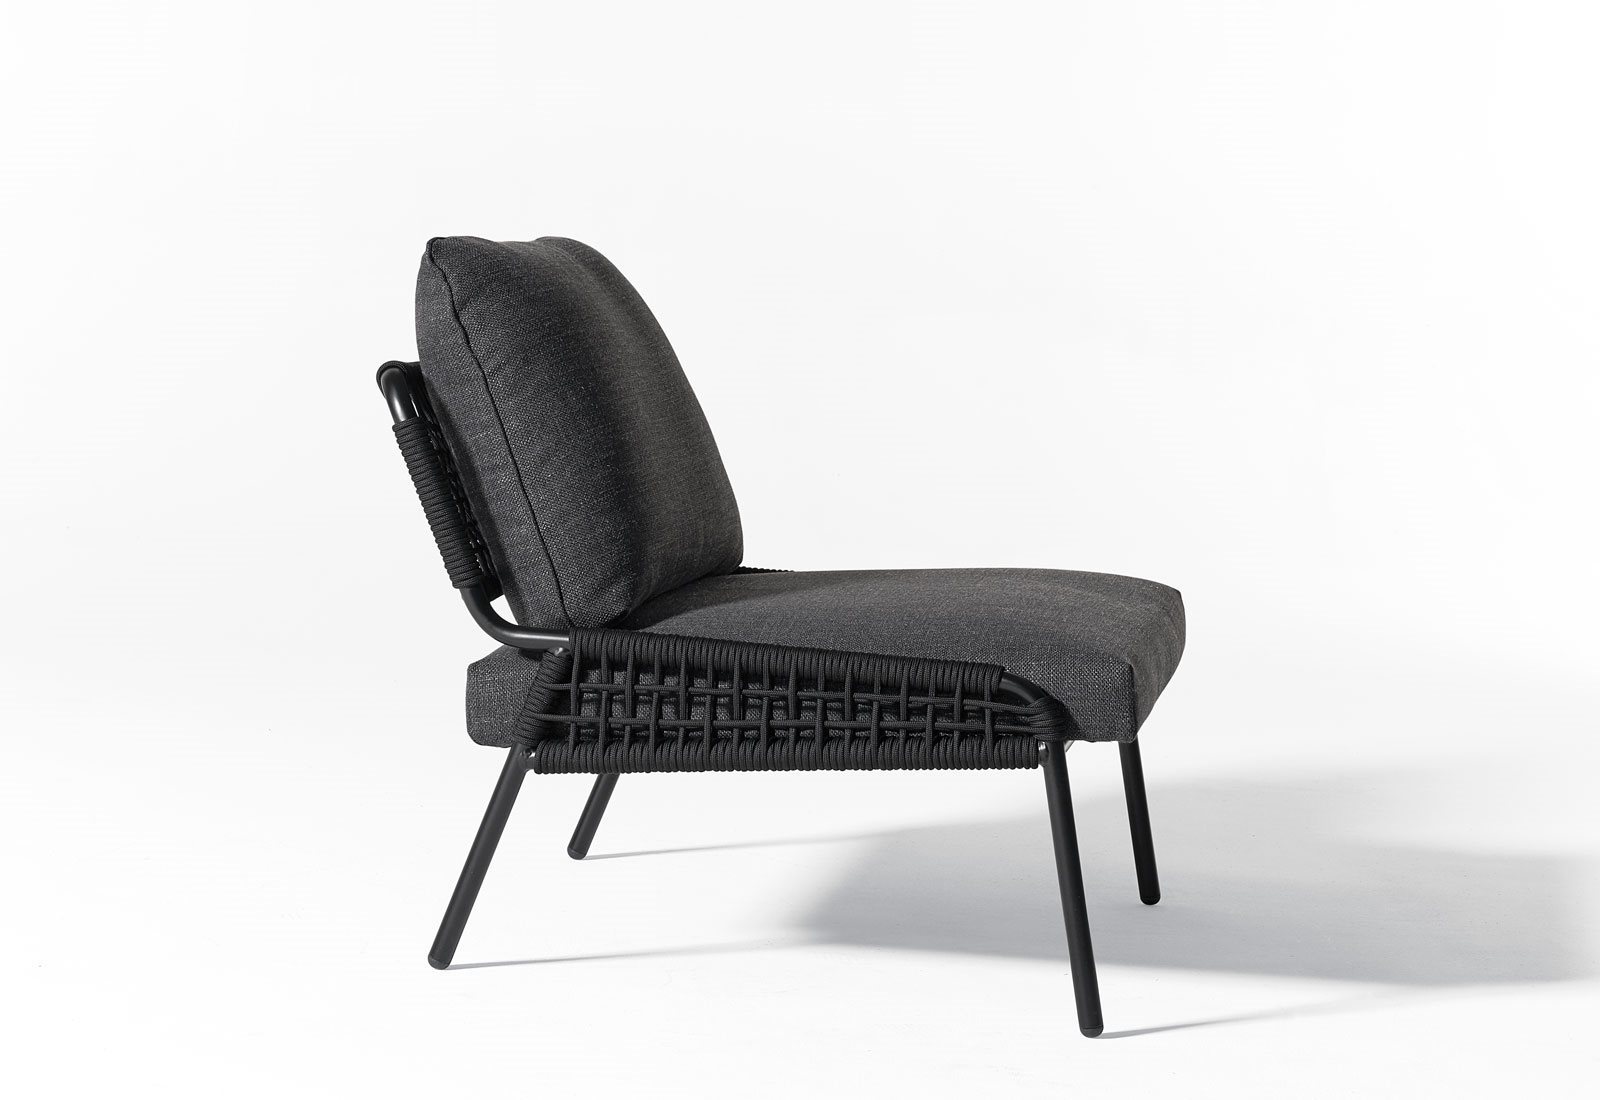 Zoe-open-air-armchair-02-1600x1100